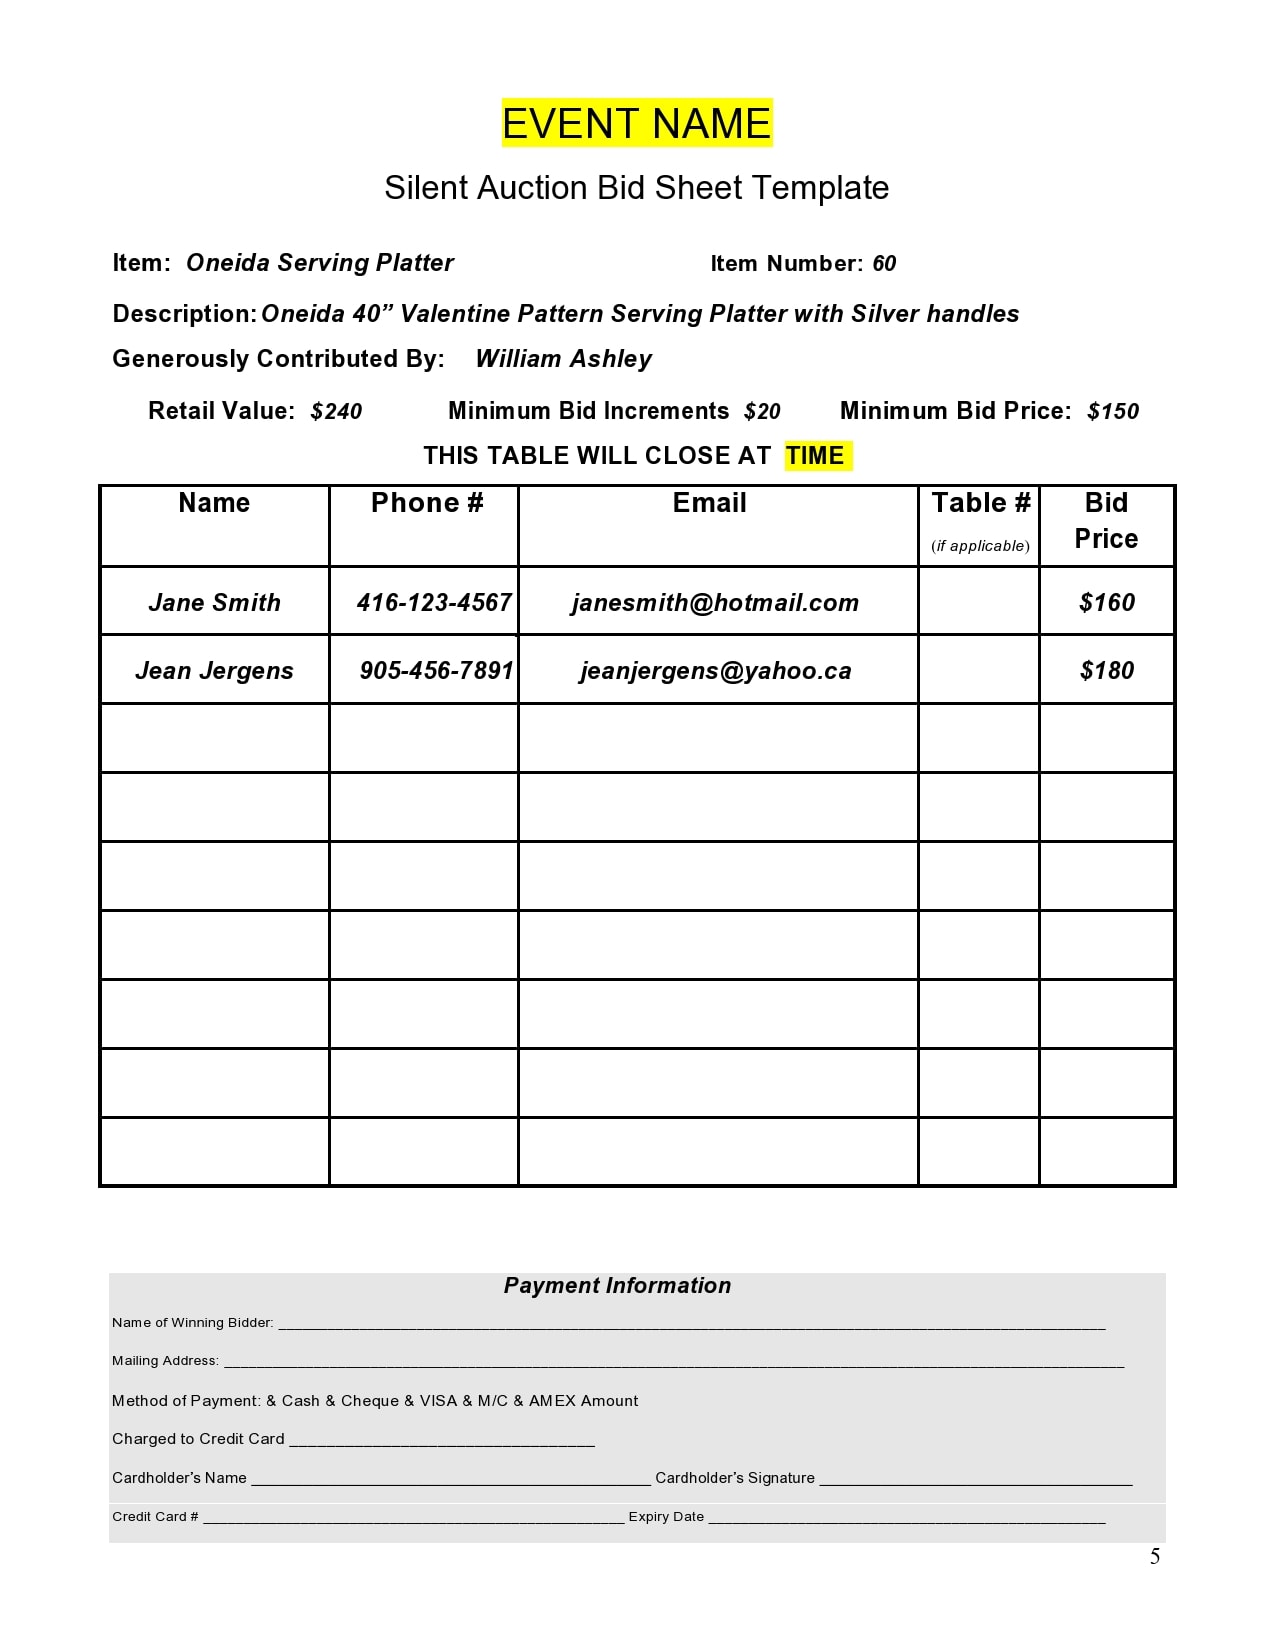 21 Silent Auction Bid Sheet Templates [Free] - TemplateArchive Regarding Auction Bid Cards Template